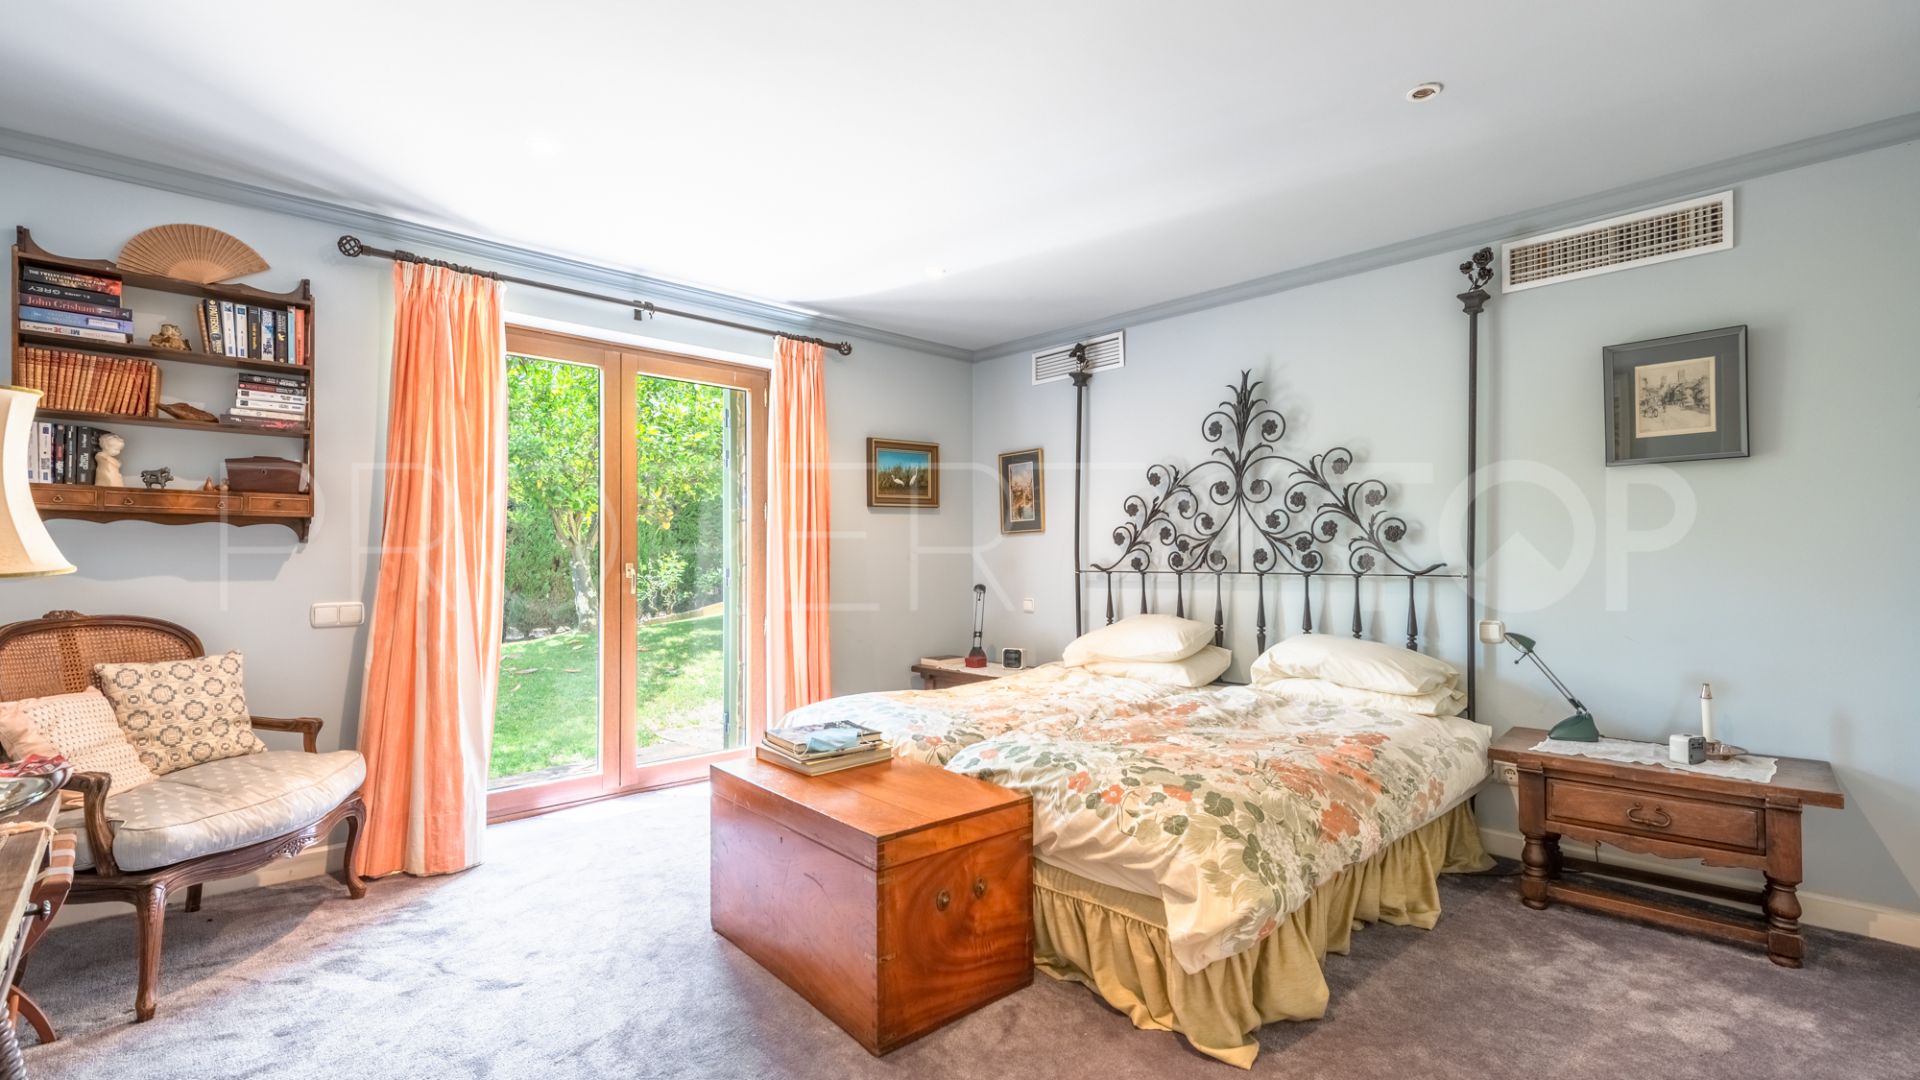 9 bedrooms villa in Zona F for sale